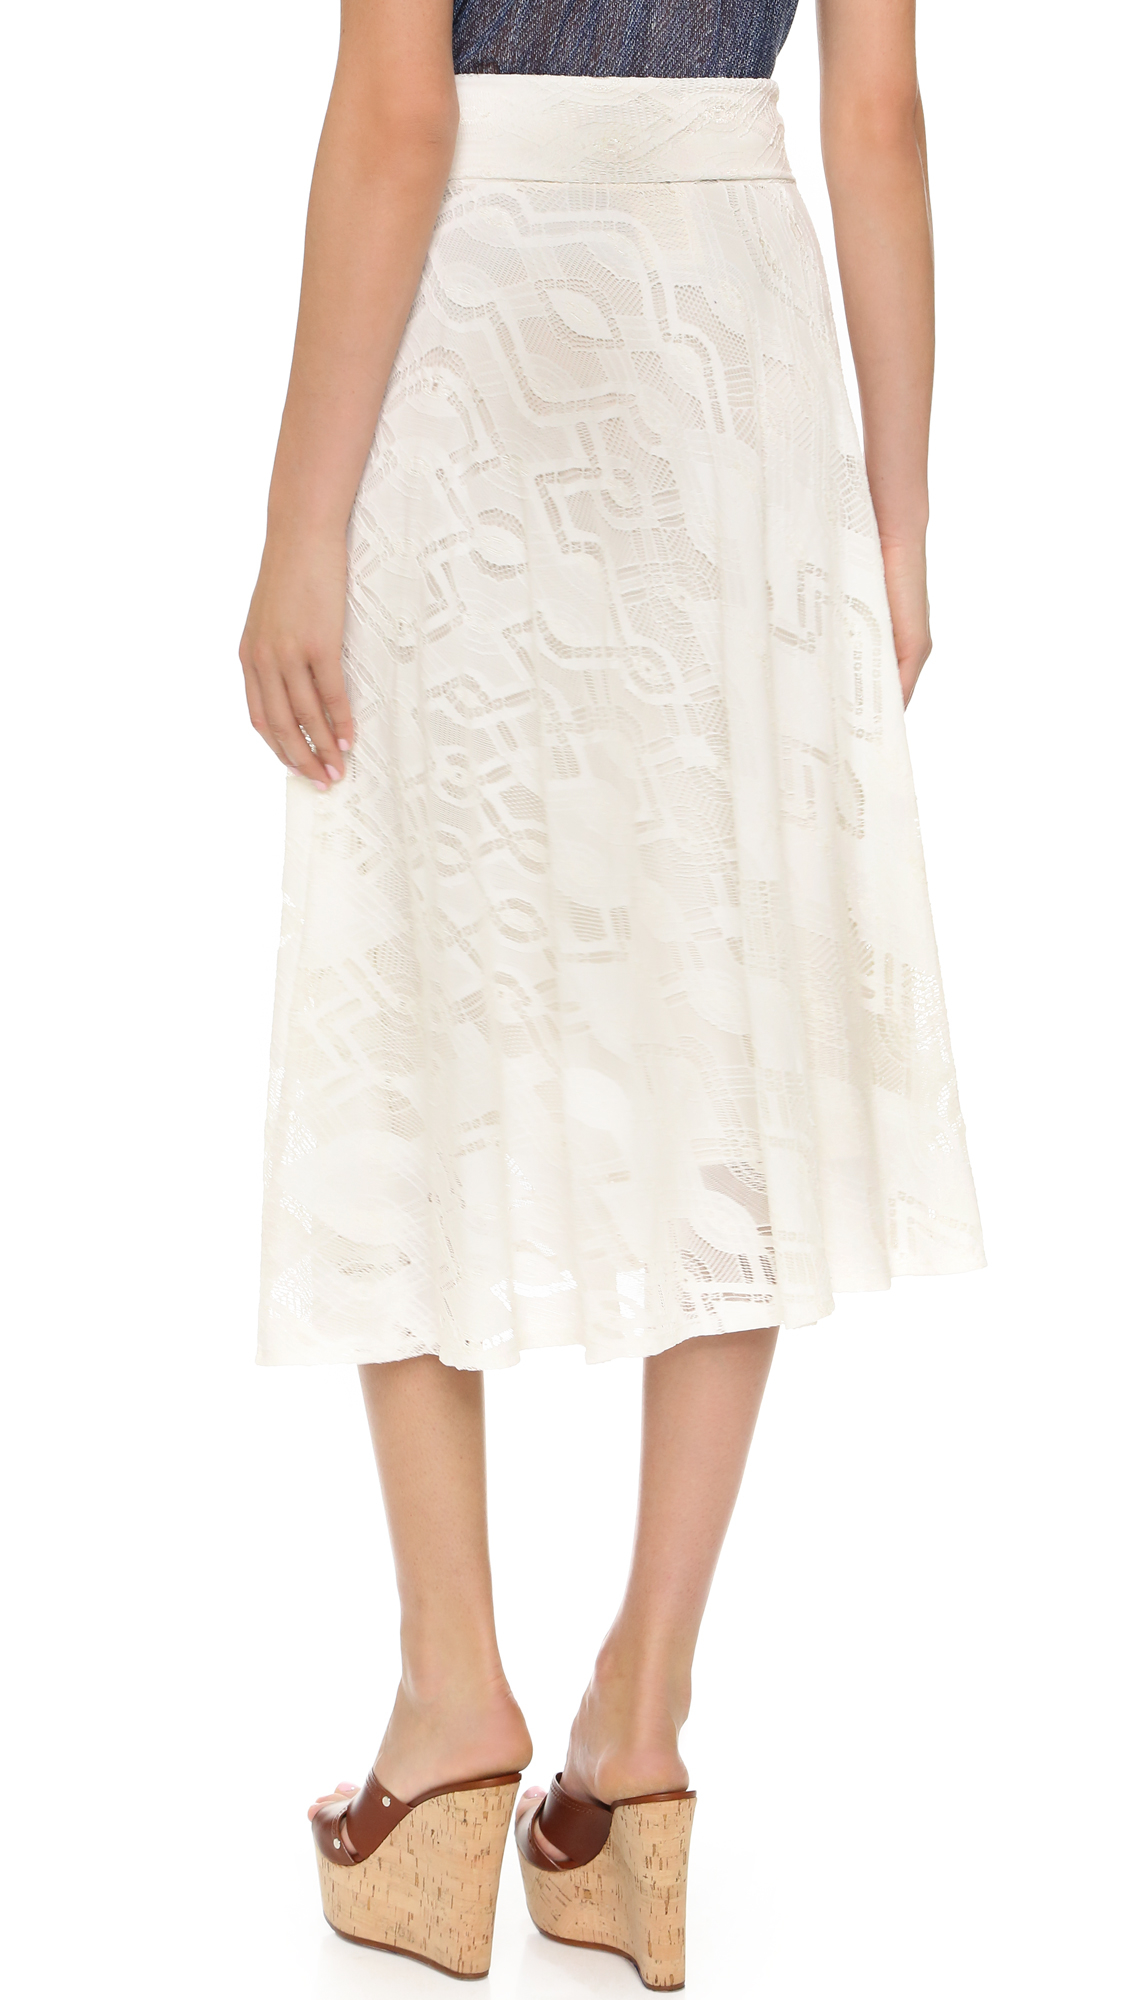 Lyst - Fuzzi Knit Skirt in White